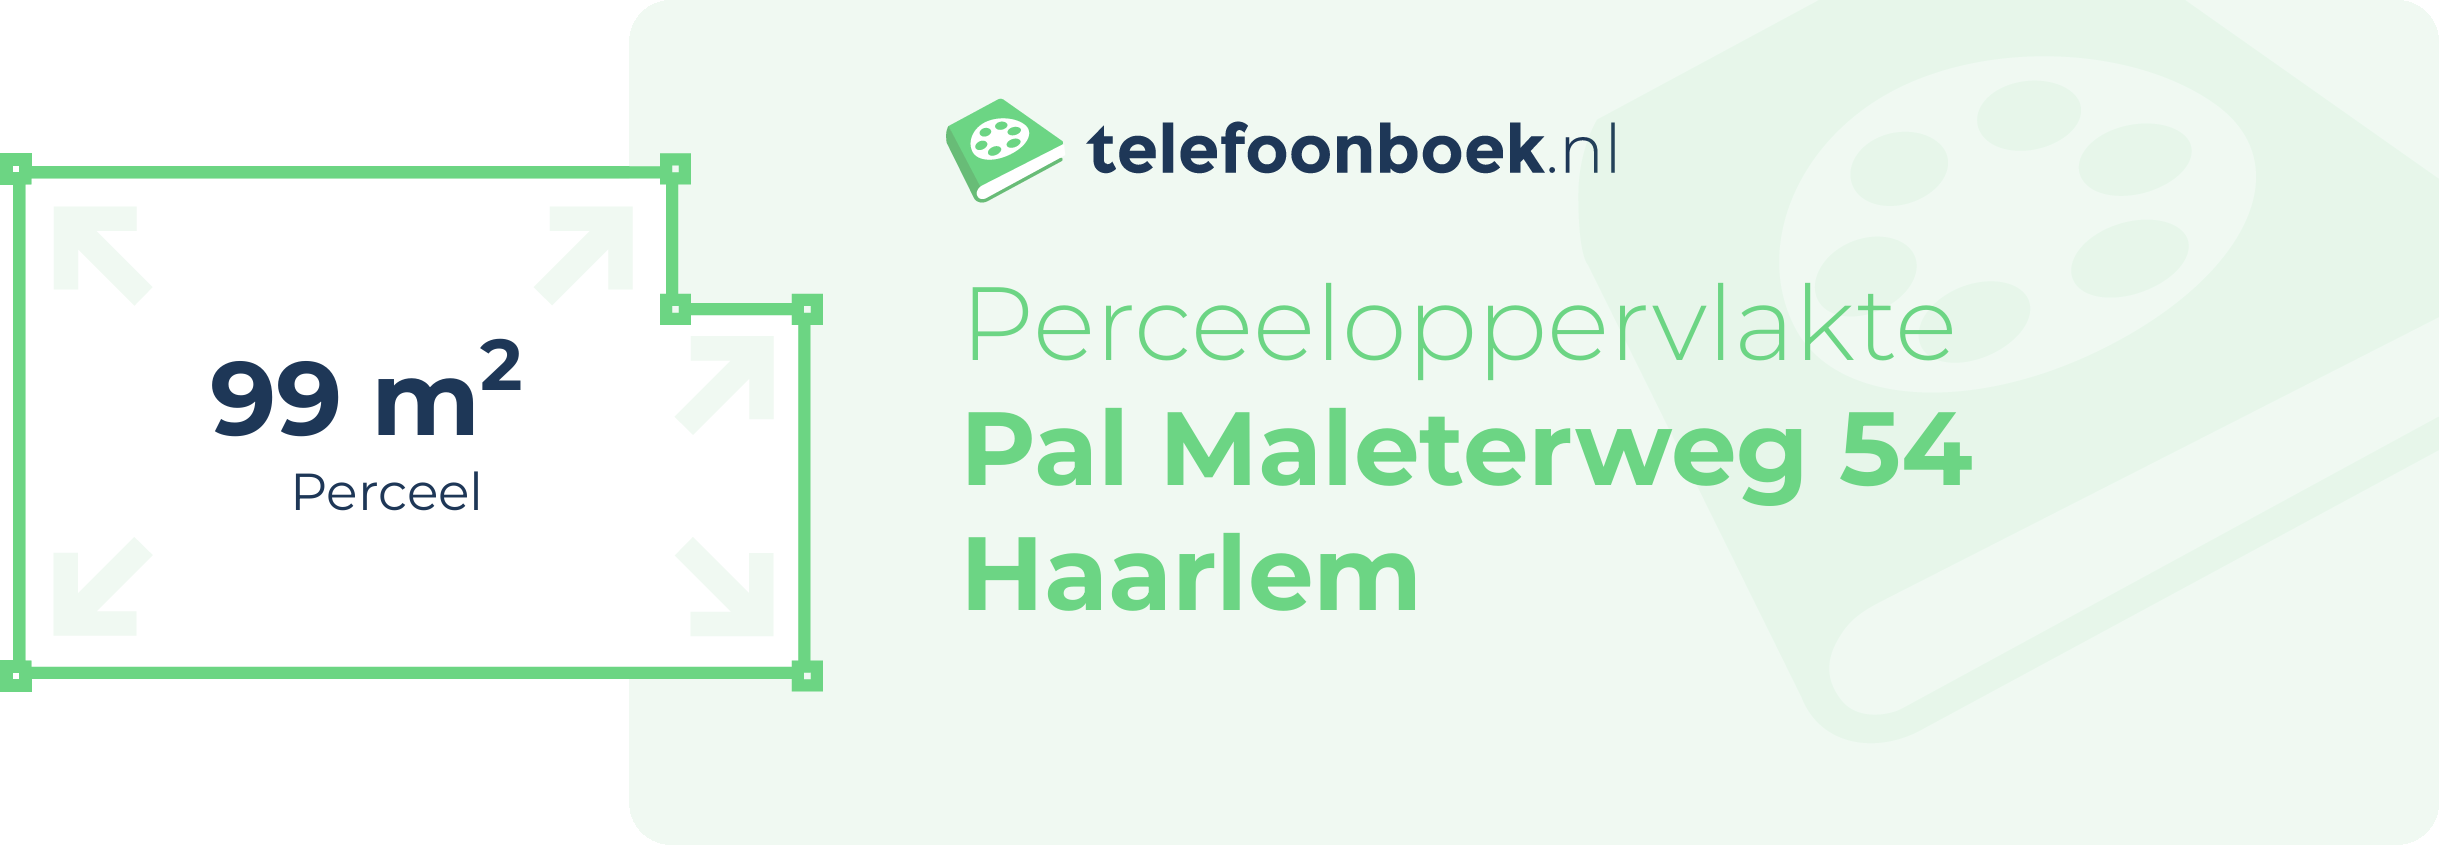 Perceeloppervlakte Pal Maleterweg 54 Haarlem